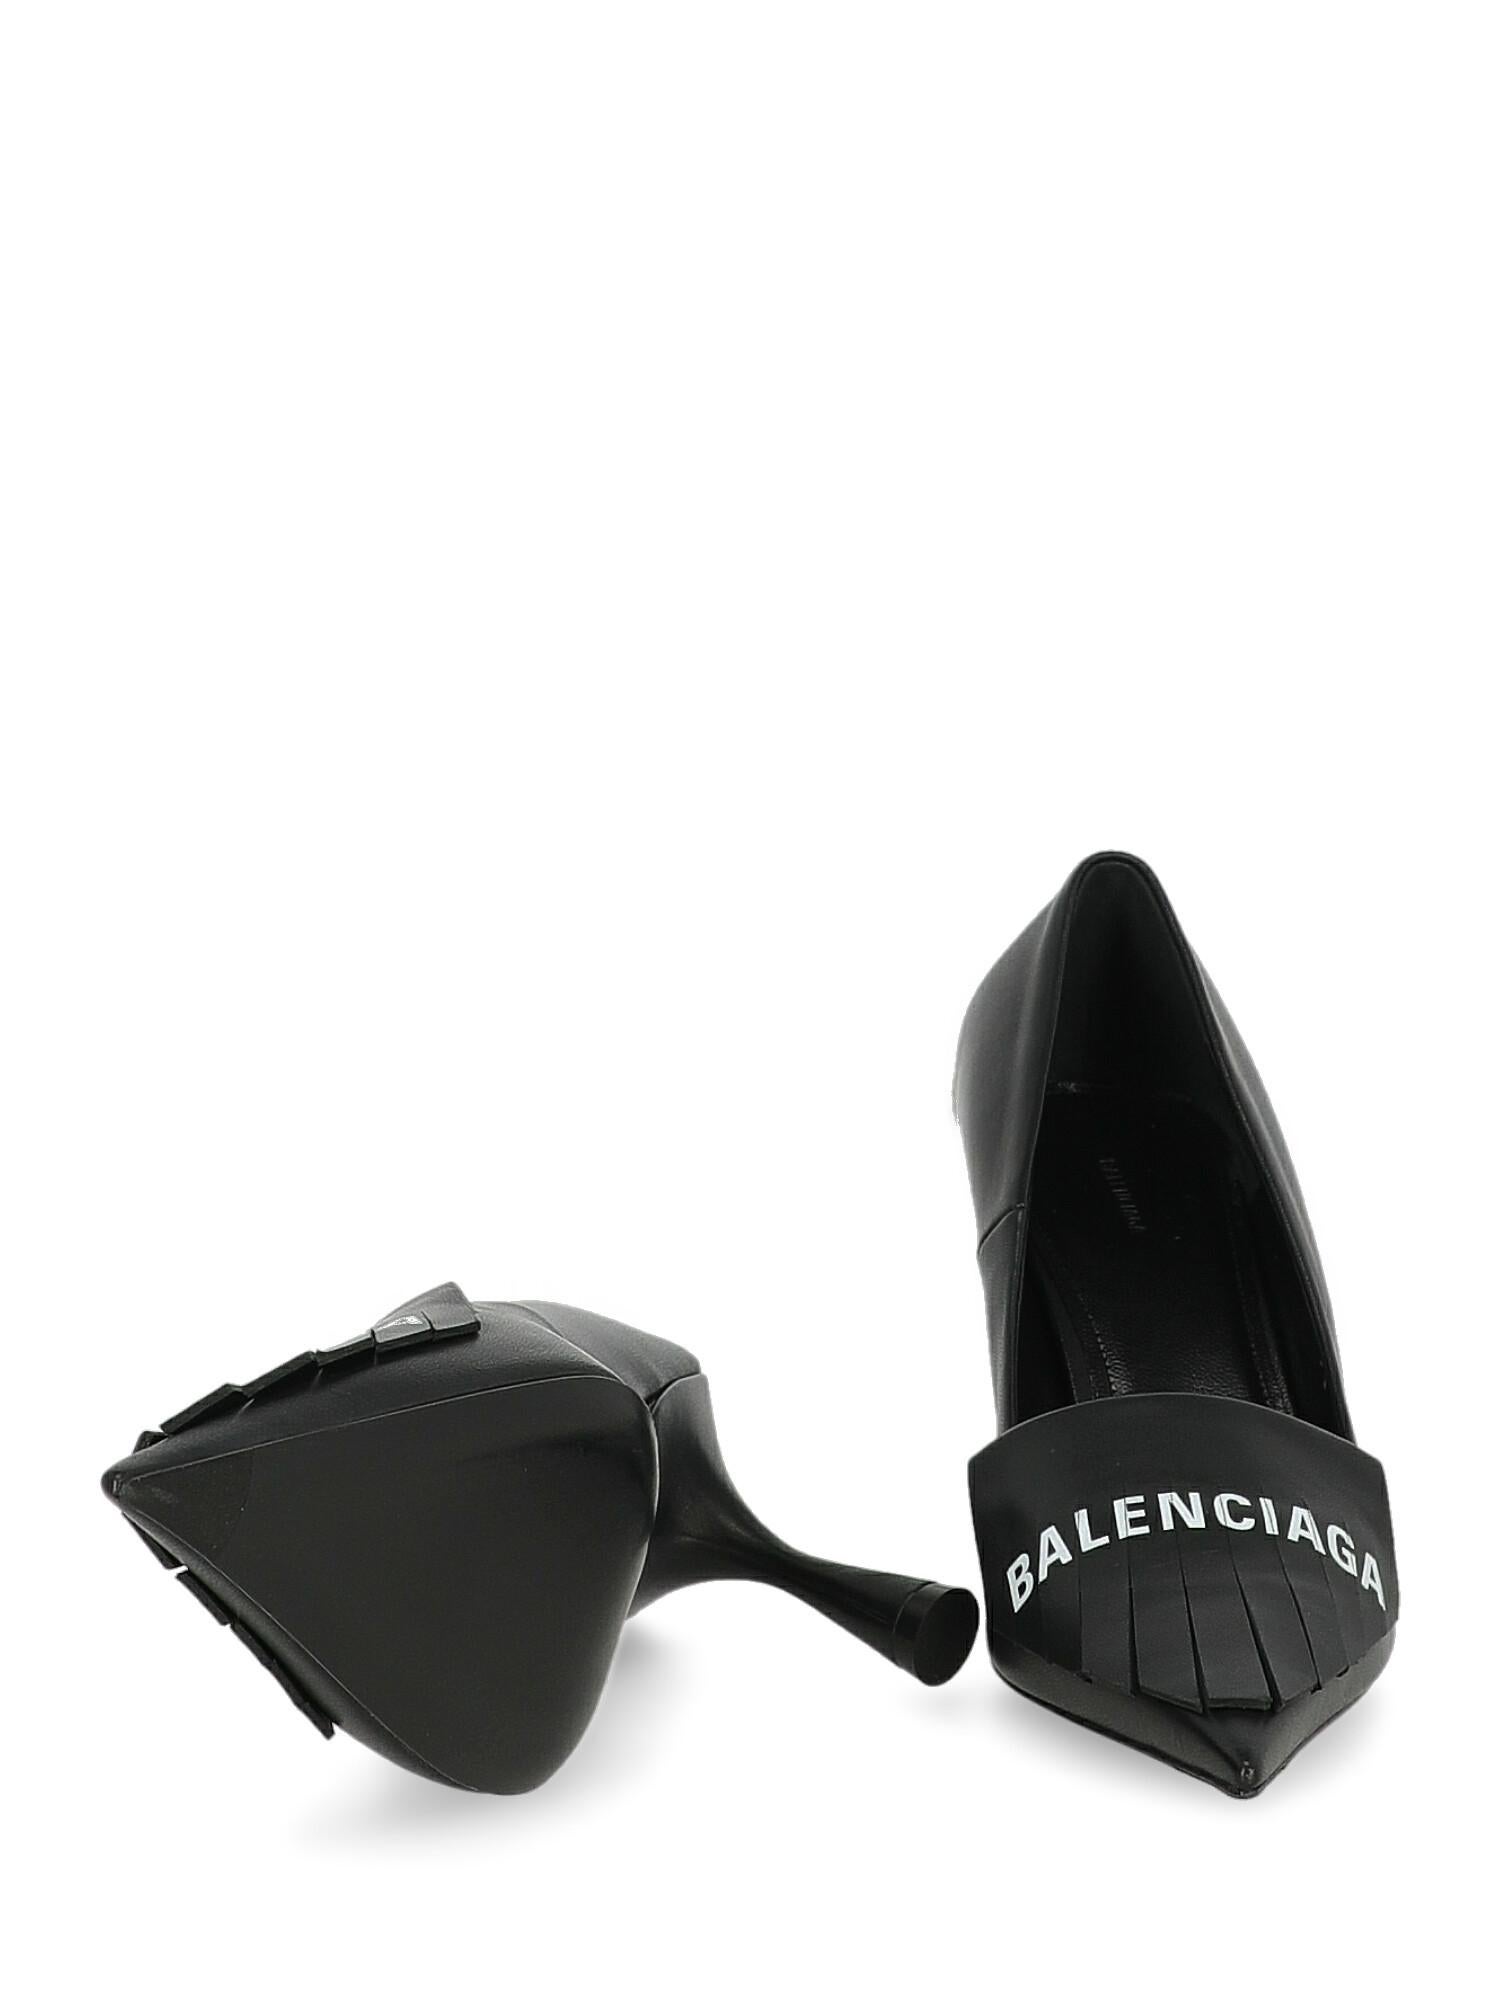 Balenciaga Woman Pumps Black Leather IT 38.5 For Sale 1